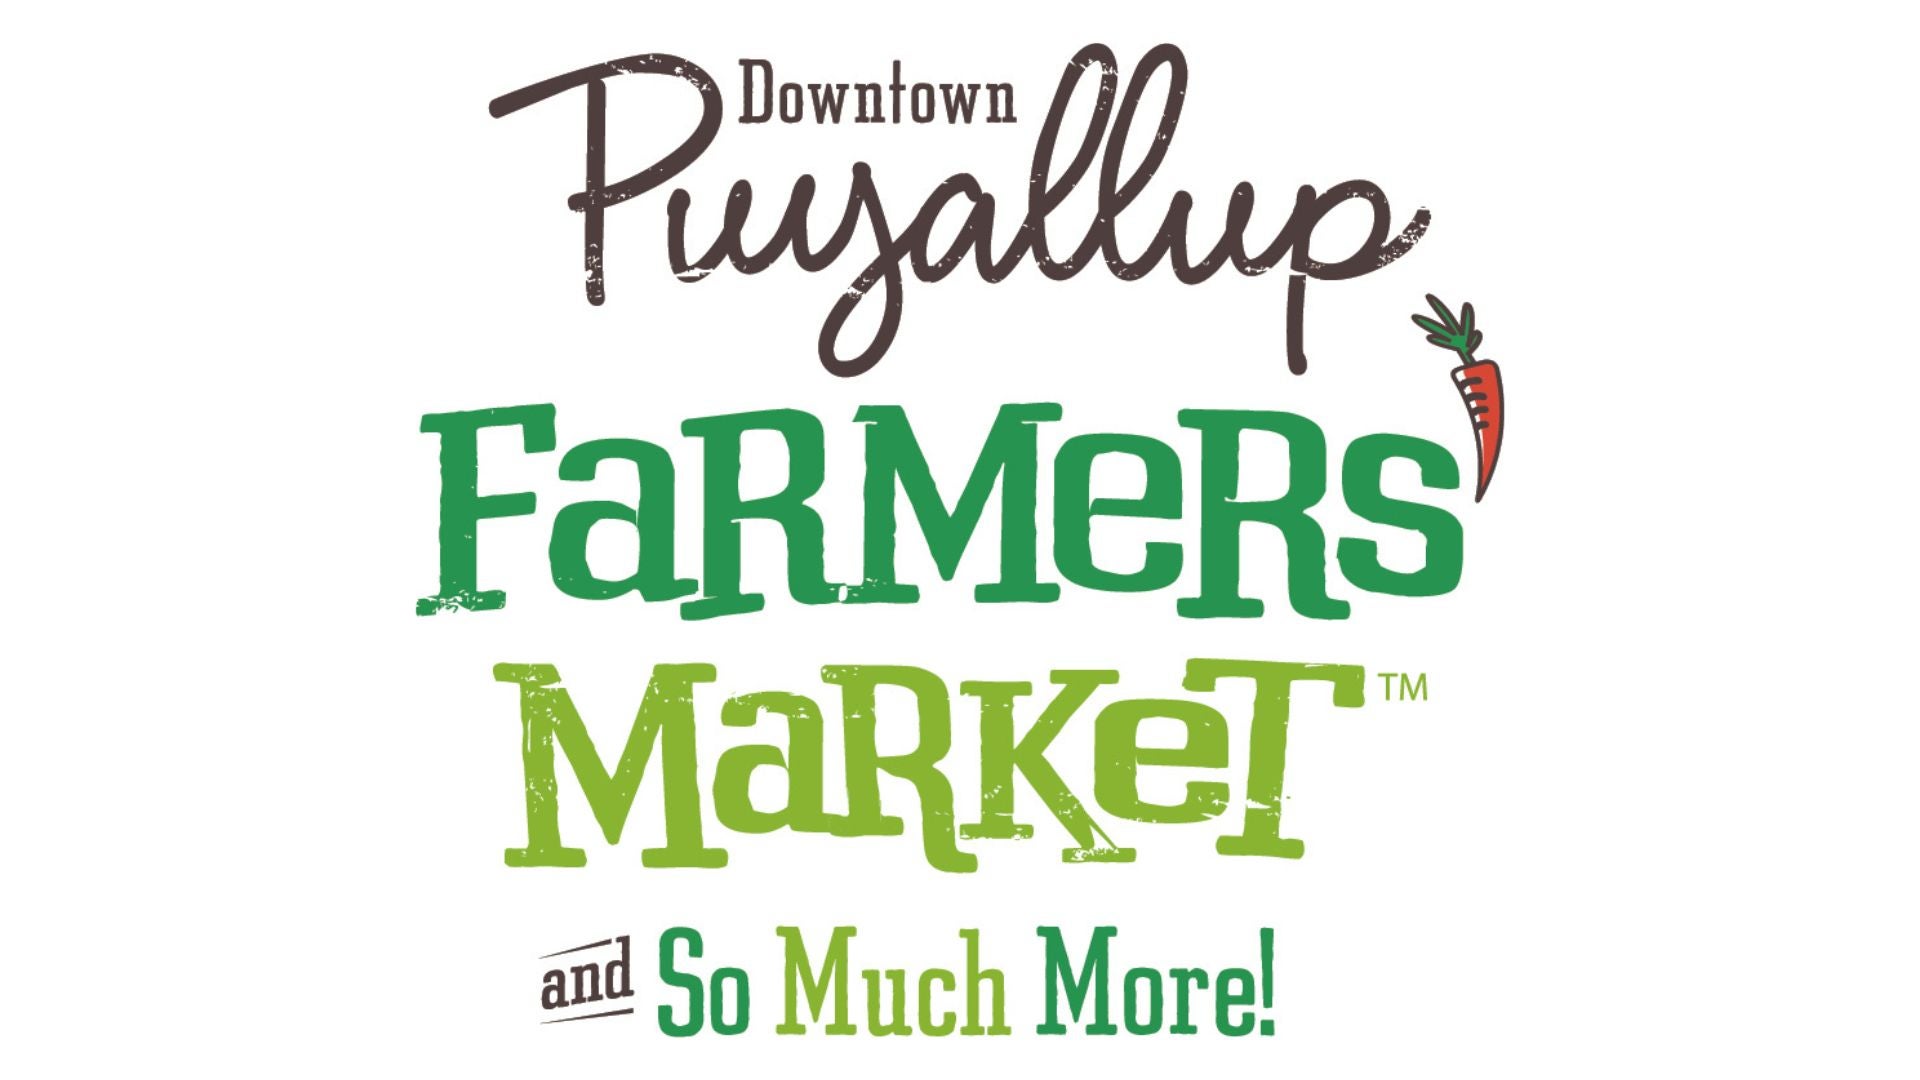 Puyallup Farmer's Market